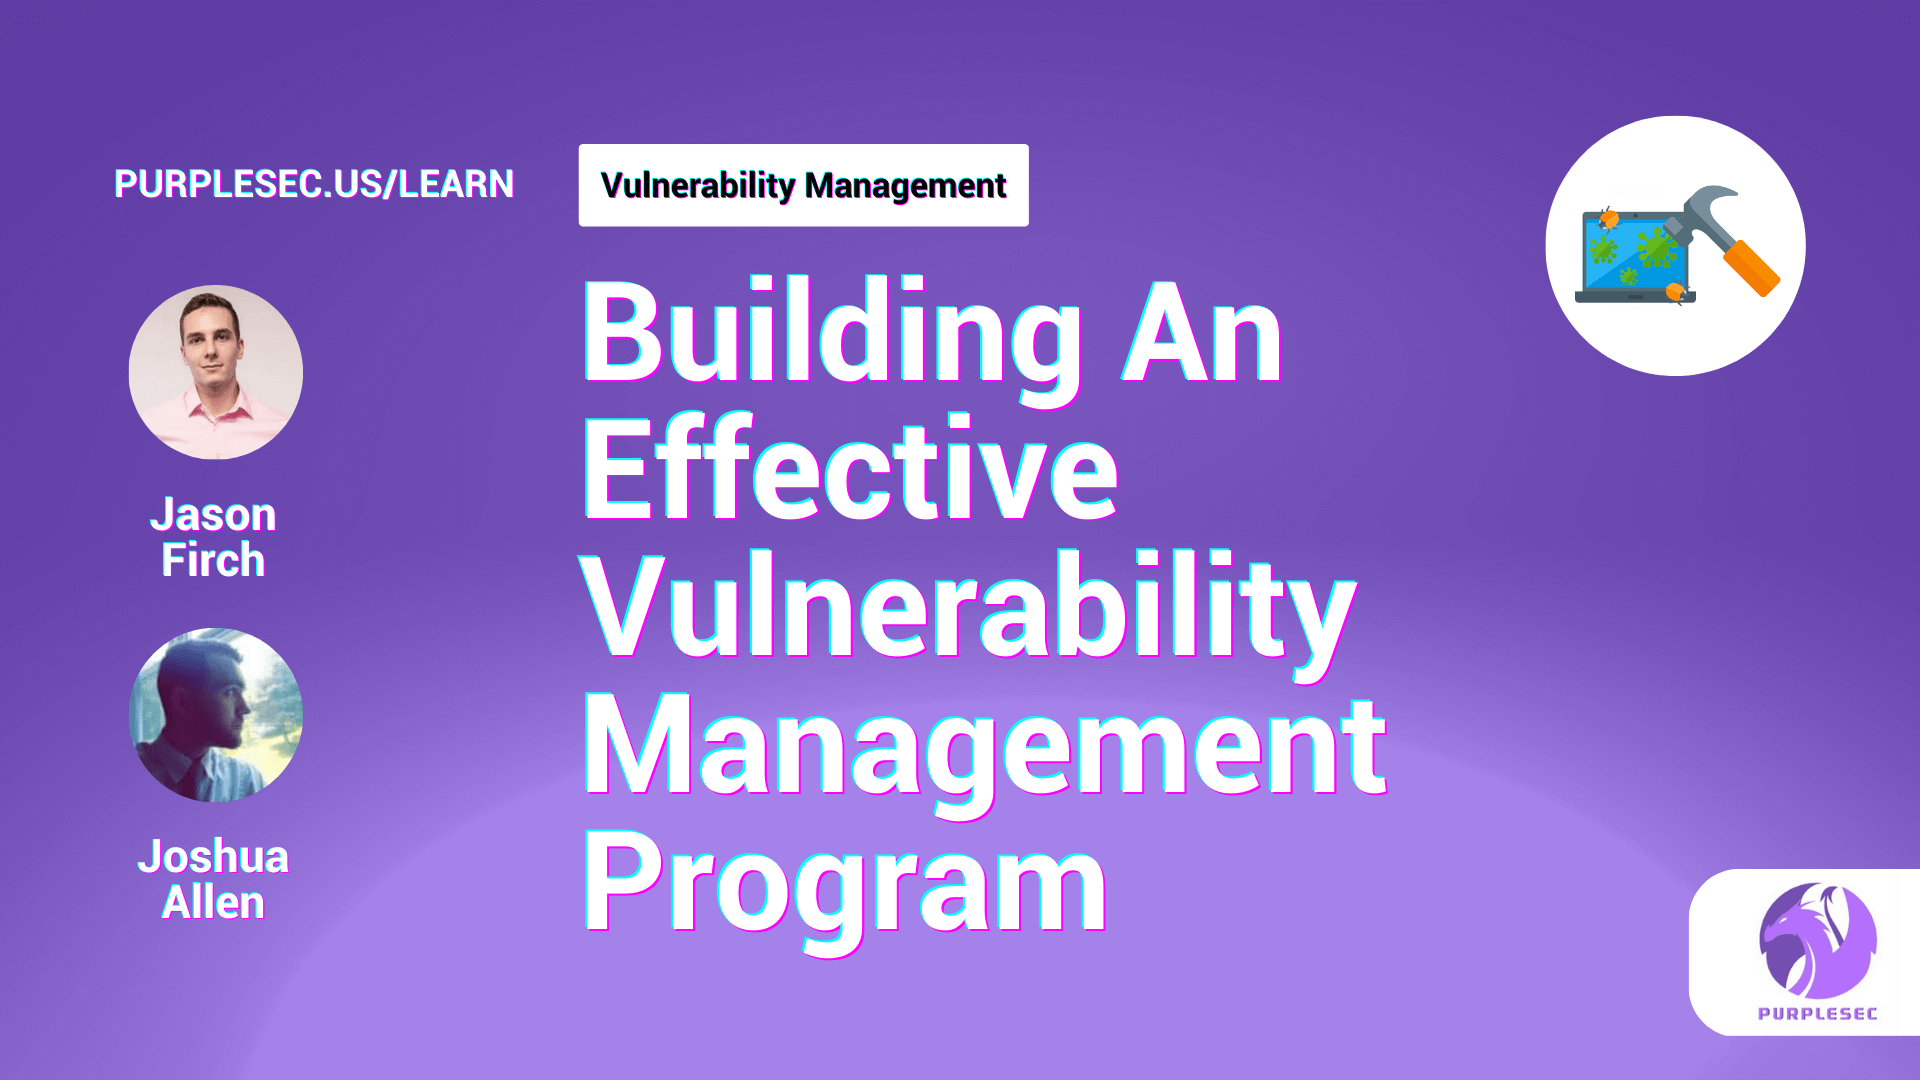 How To Build An Effective Vulnerability Management Program